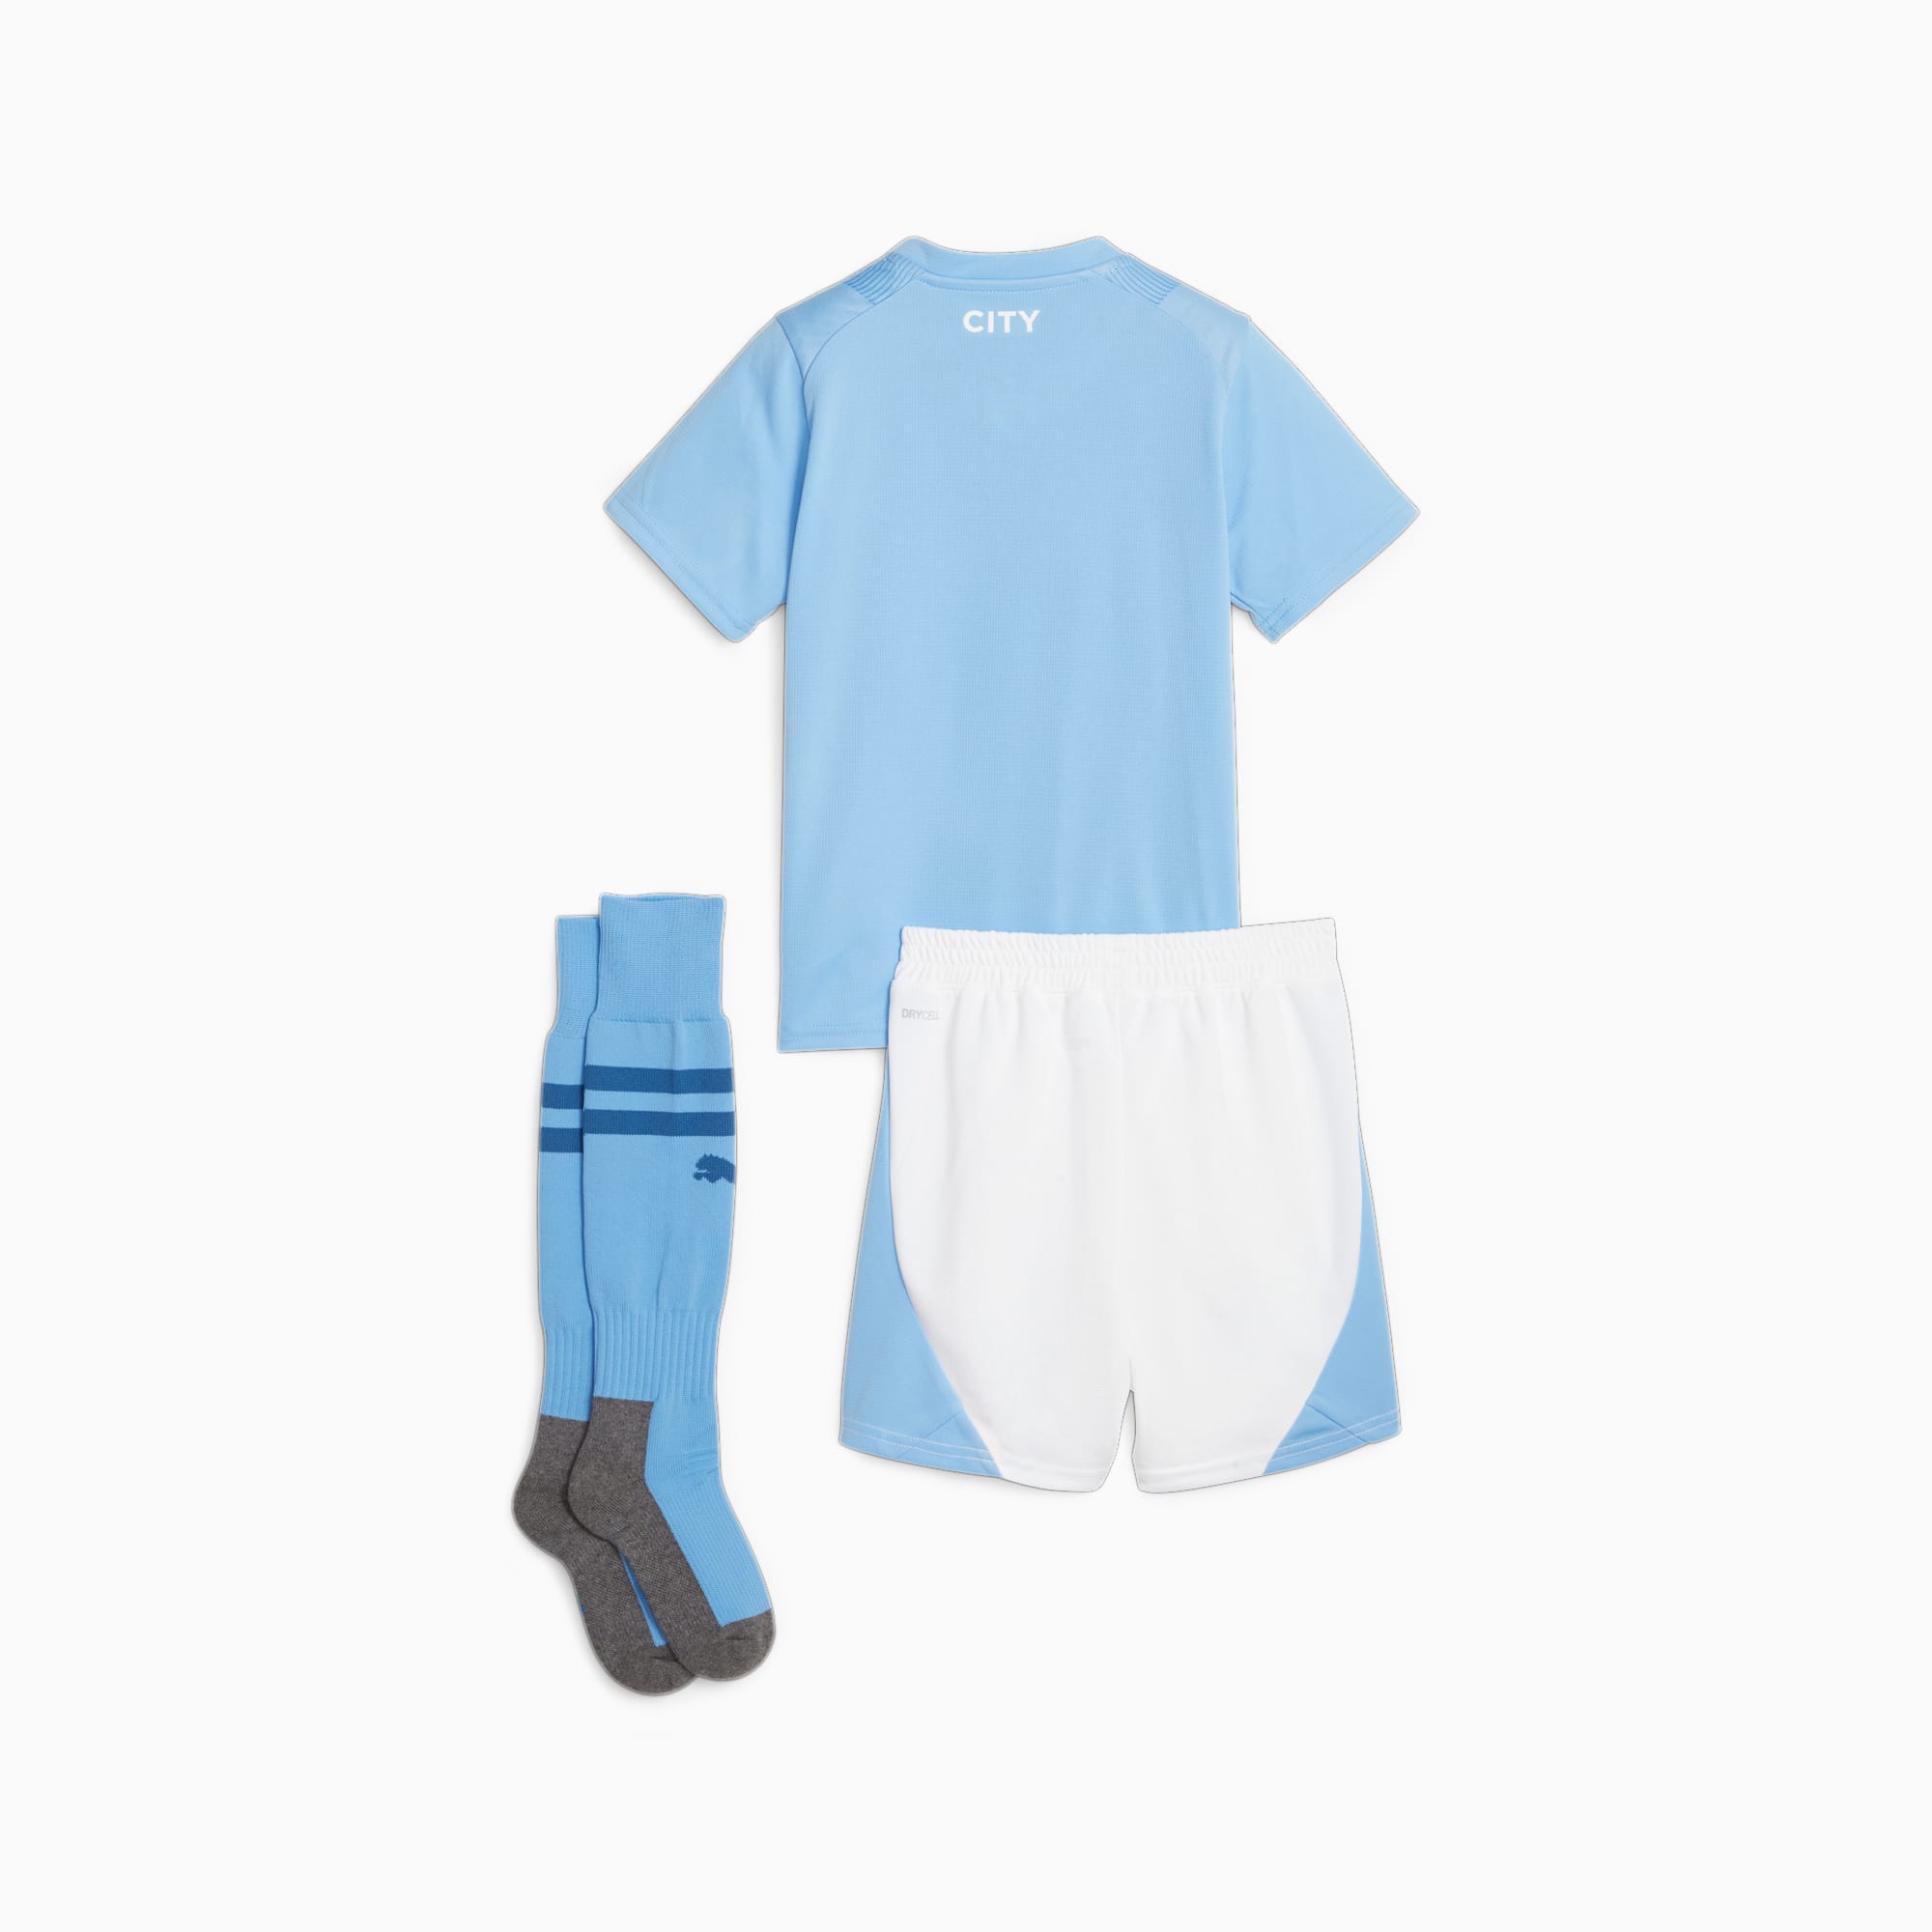 PUMA Manchester City F.C. Home Mini Kit Kinder, Blau/Weiß, Größe: 104, Kleidung